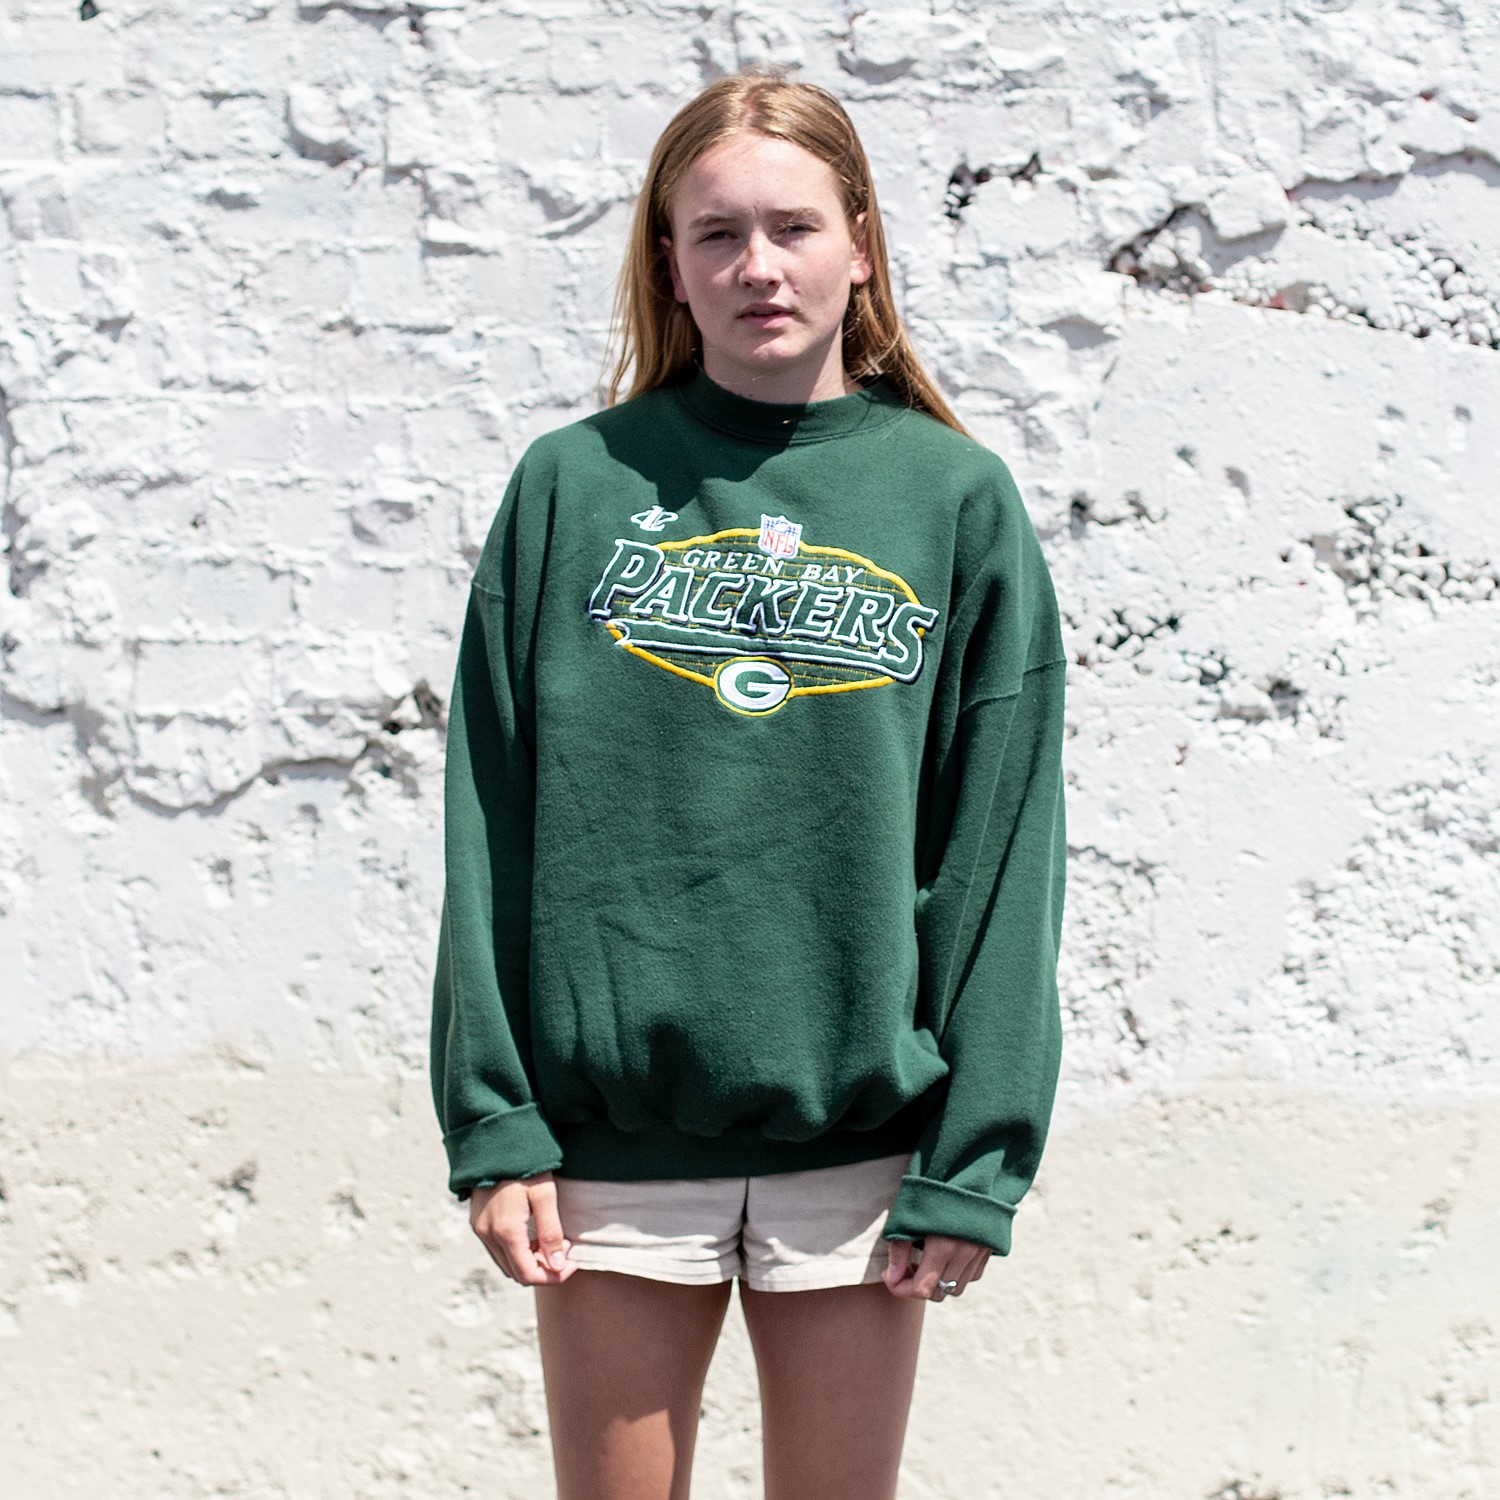 cheap green bay packers sweatshirts